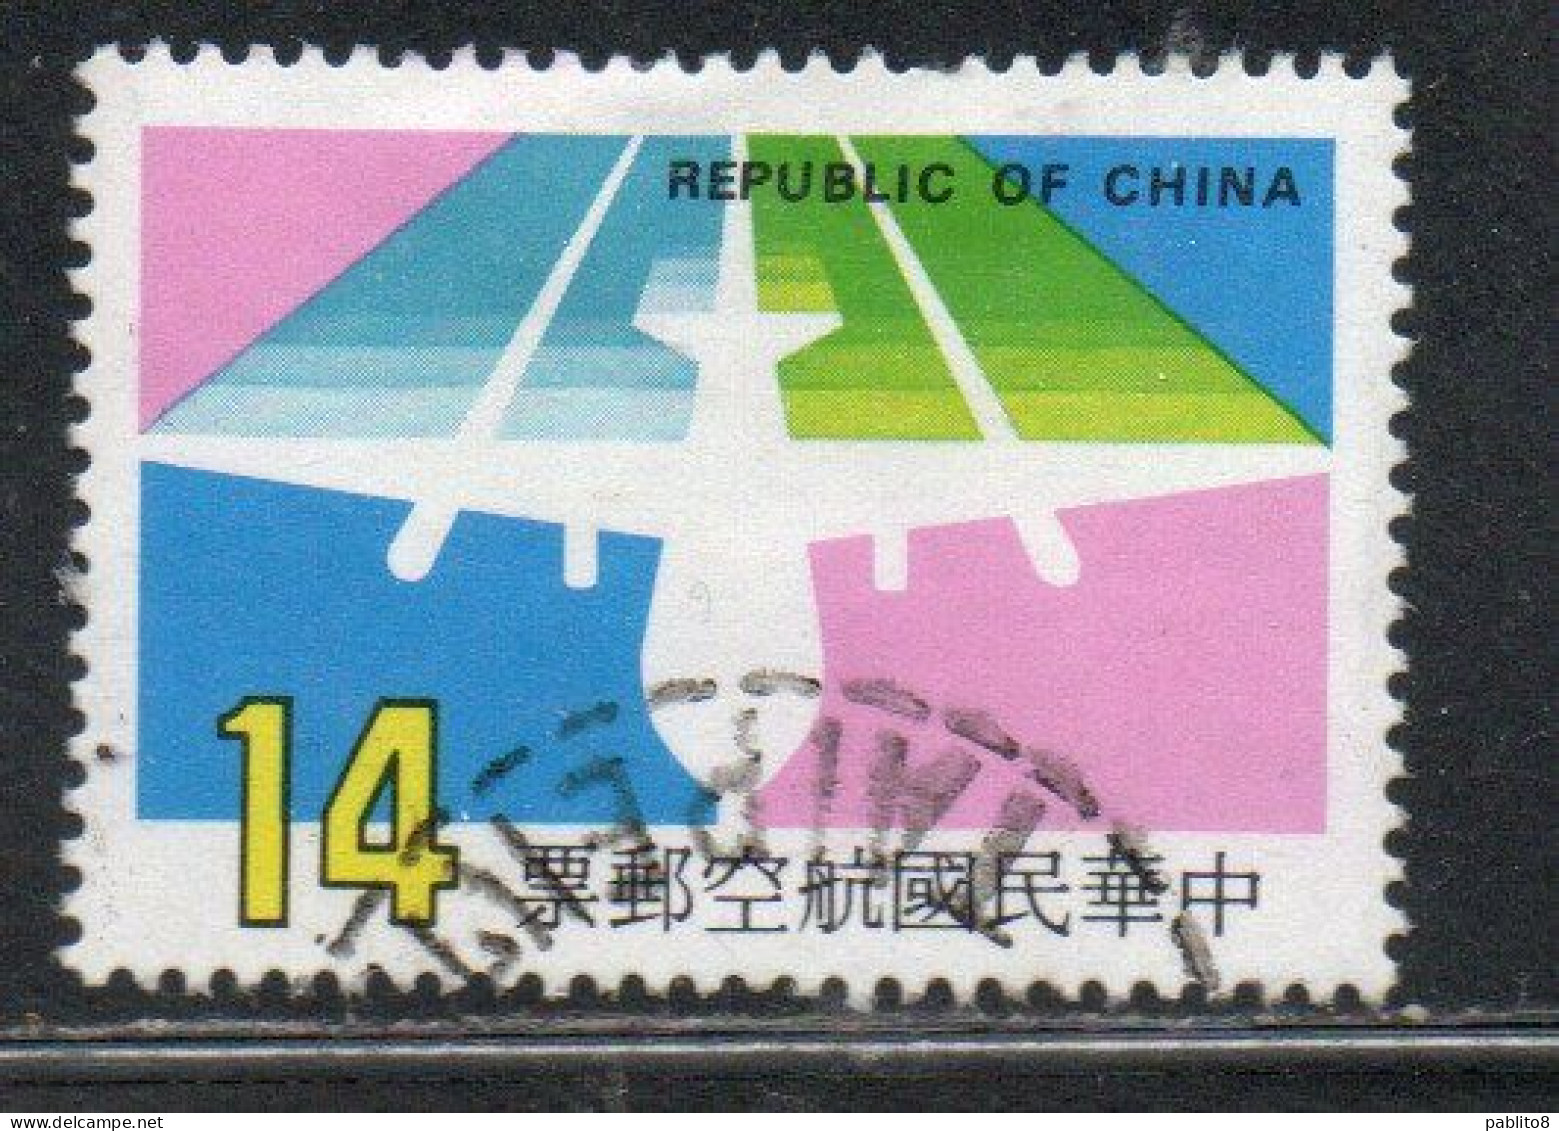 CHINA REPUBLIC CINA TAIWAN FORMOSA 1987 AIR POST MAIL AIRMAIL AIRPLANE 14$ USED USATO OBLITERE' - Posta Aerea